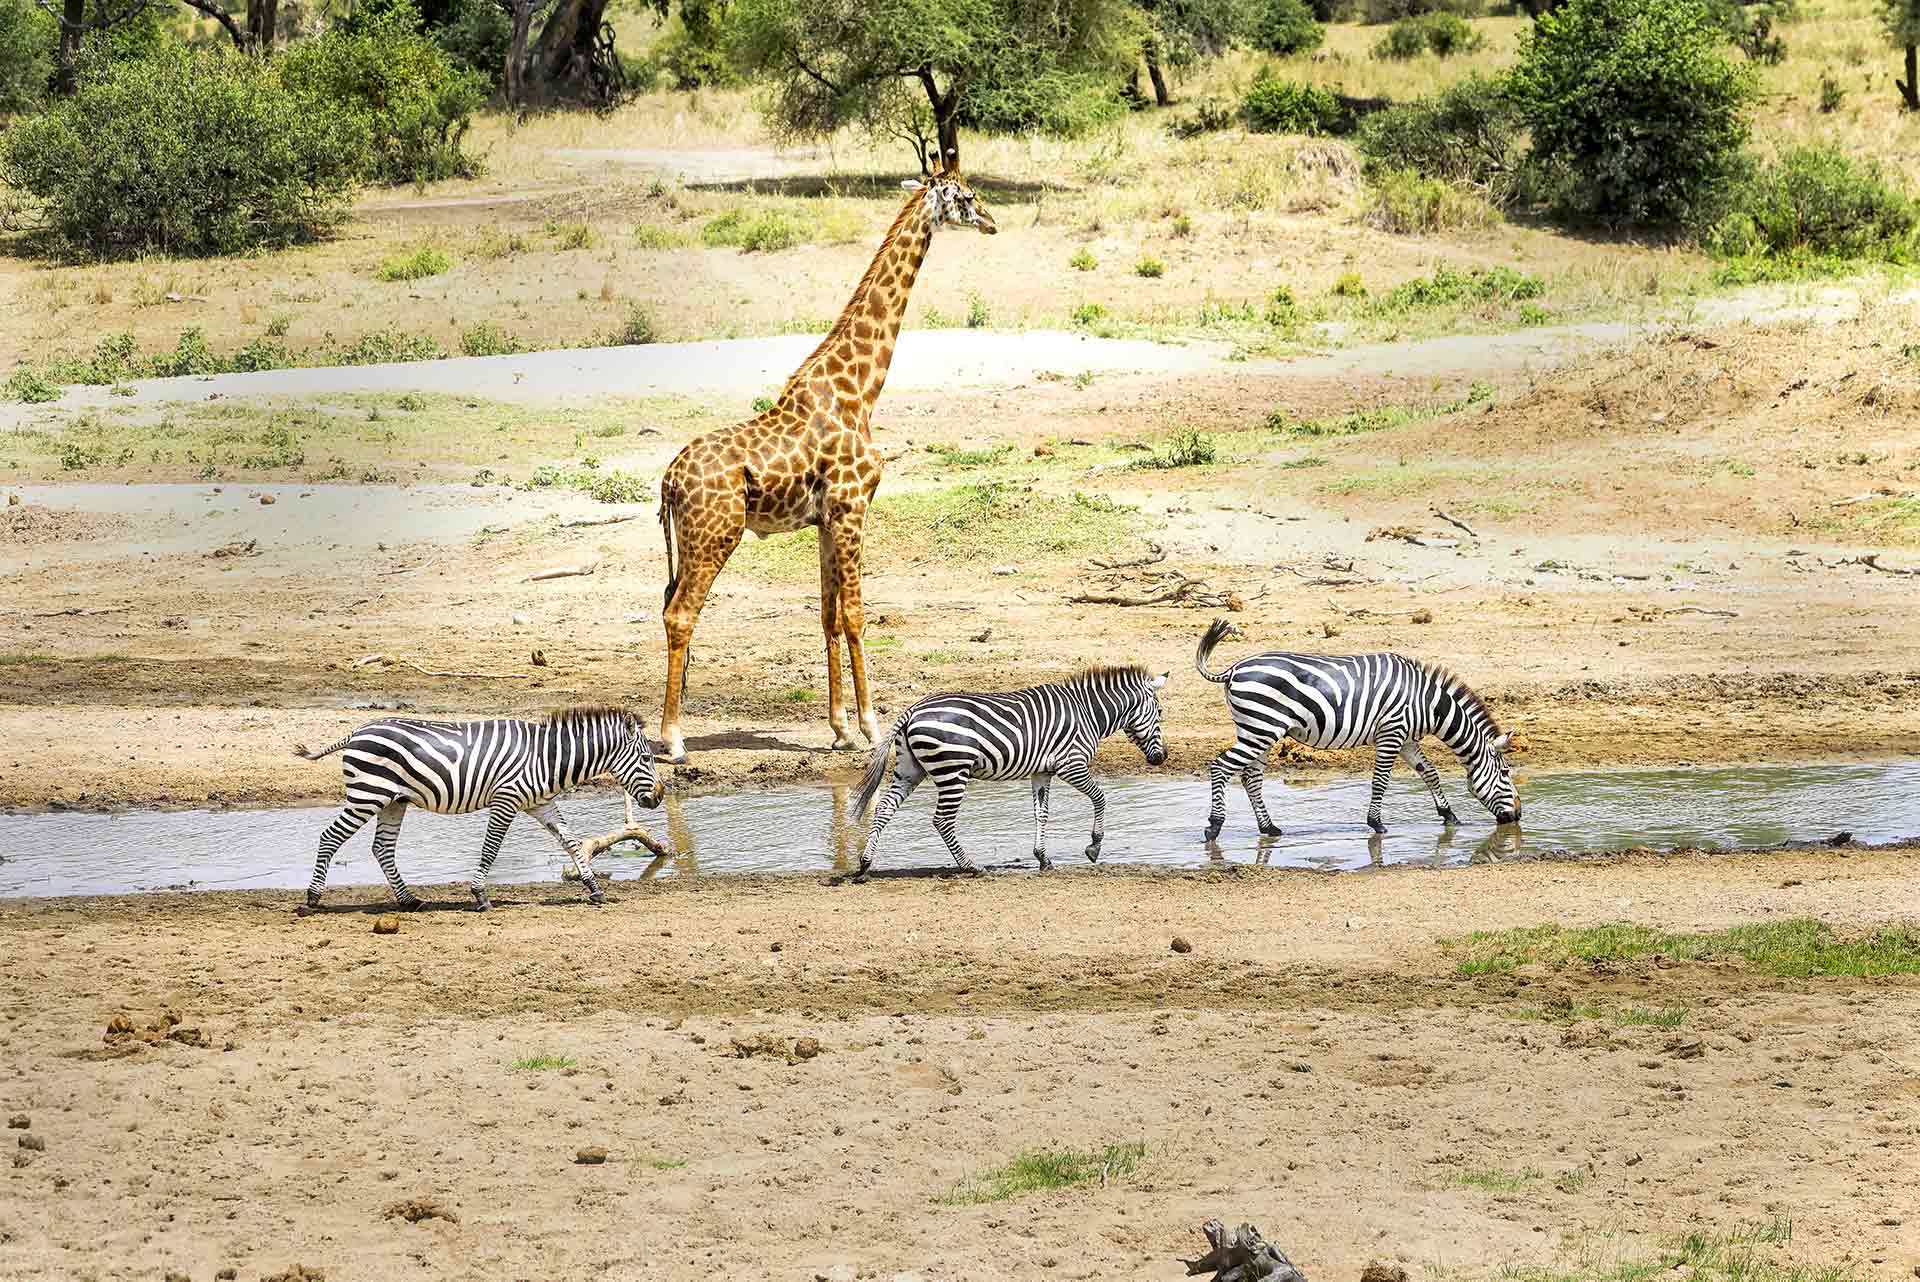 A giraffe stands by as three zebra walk by